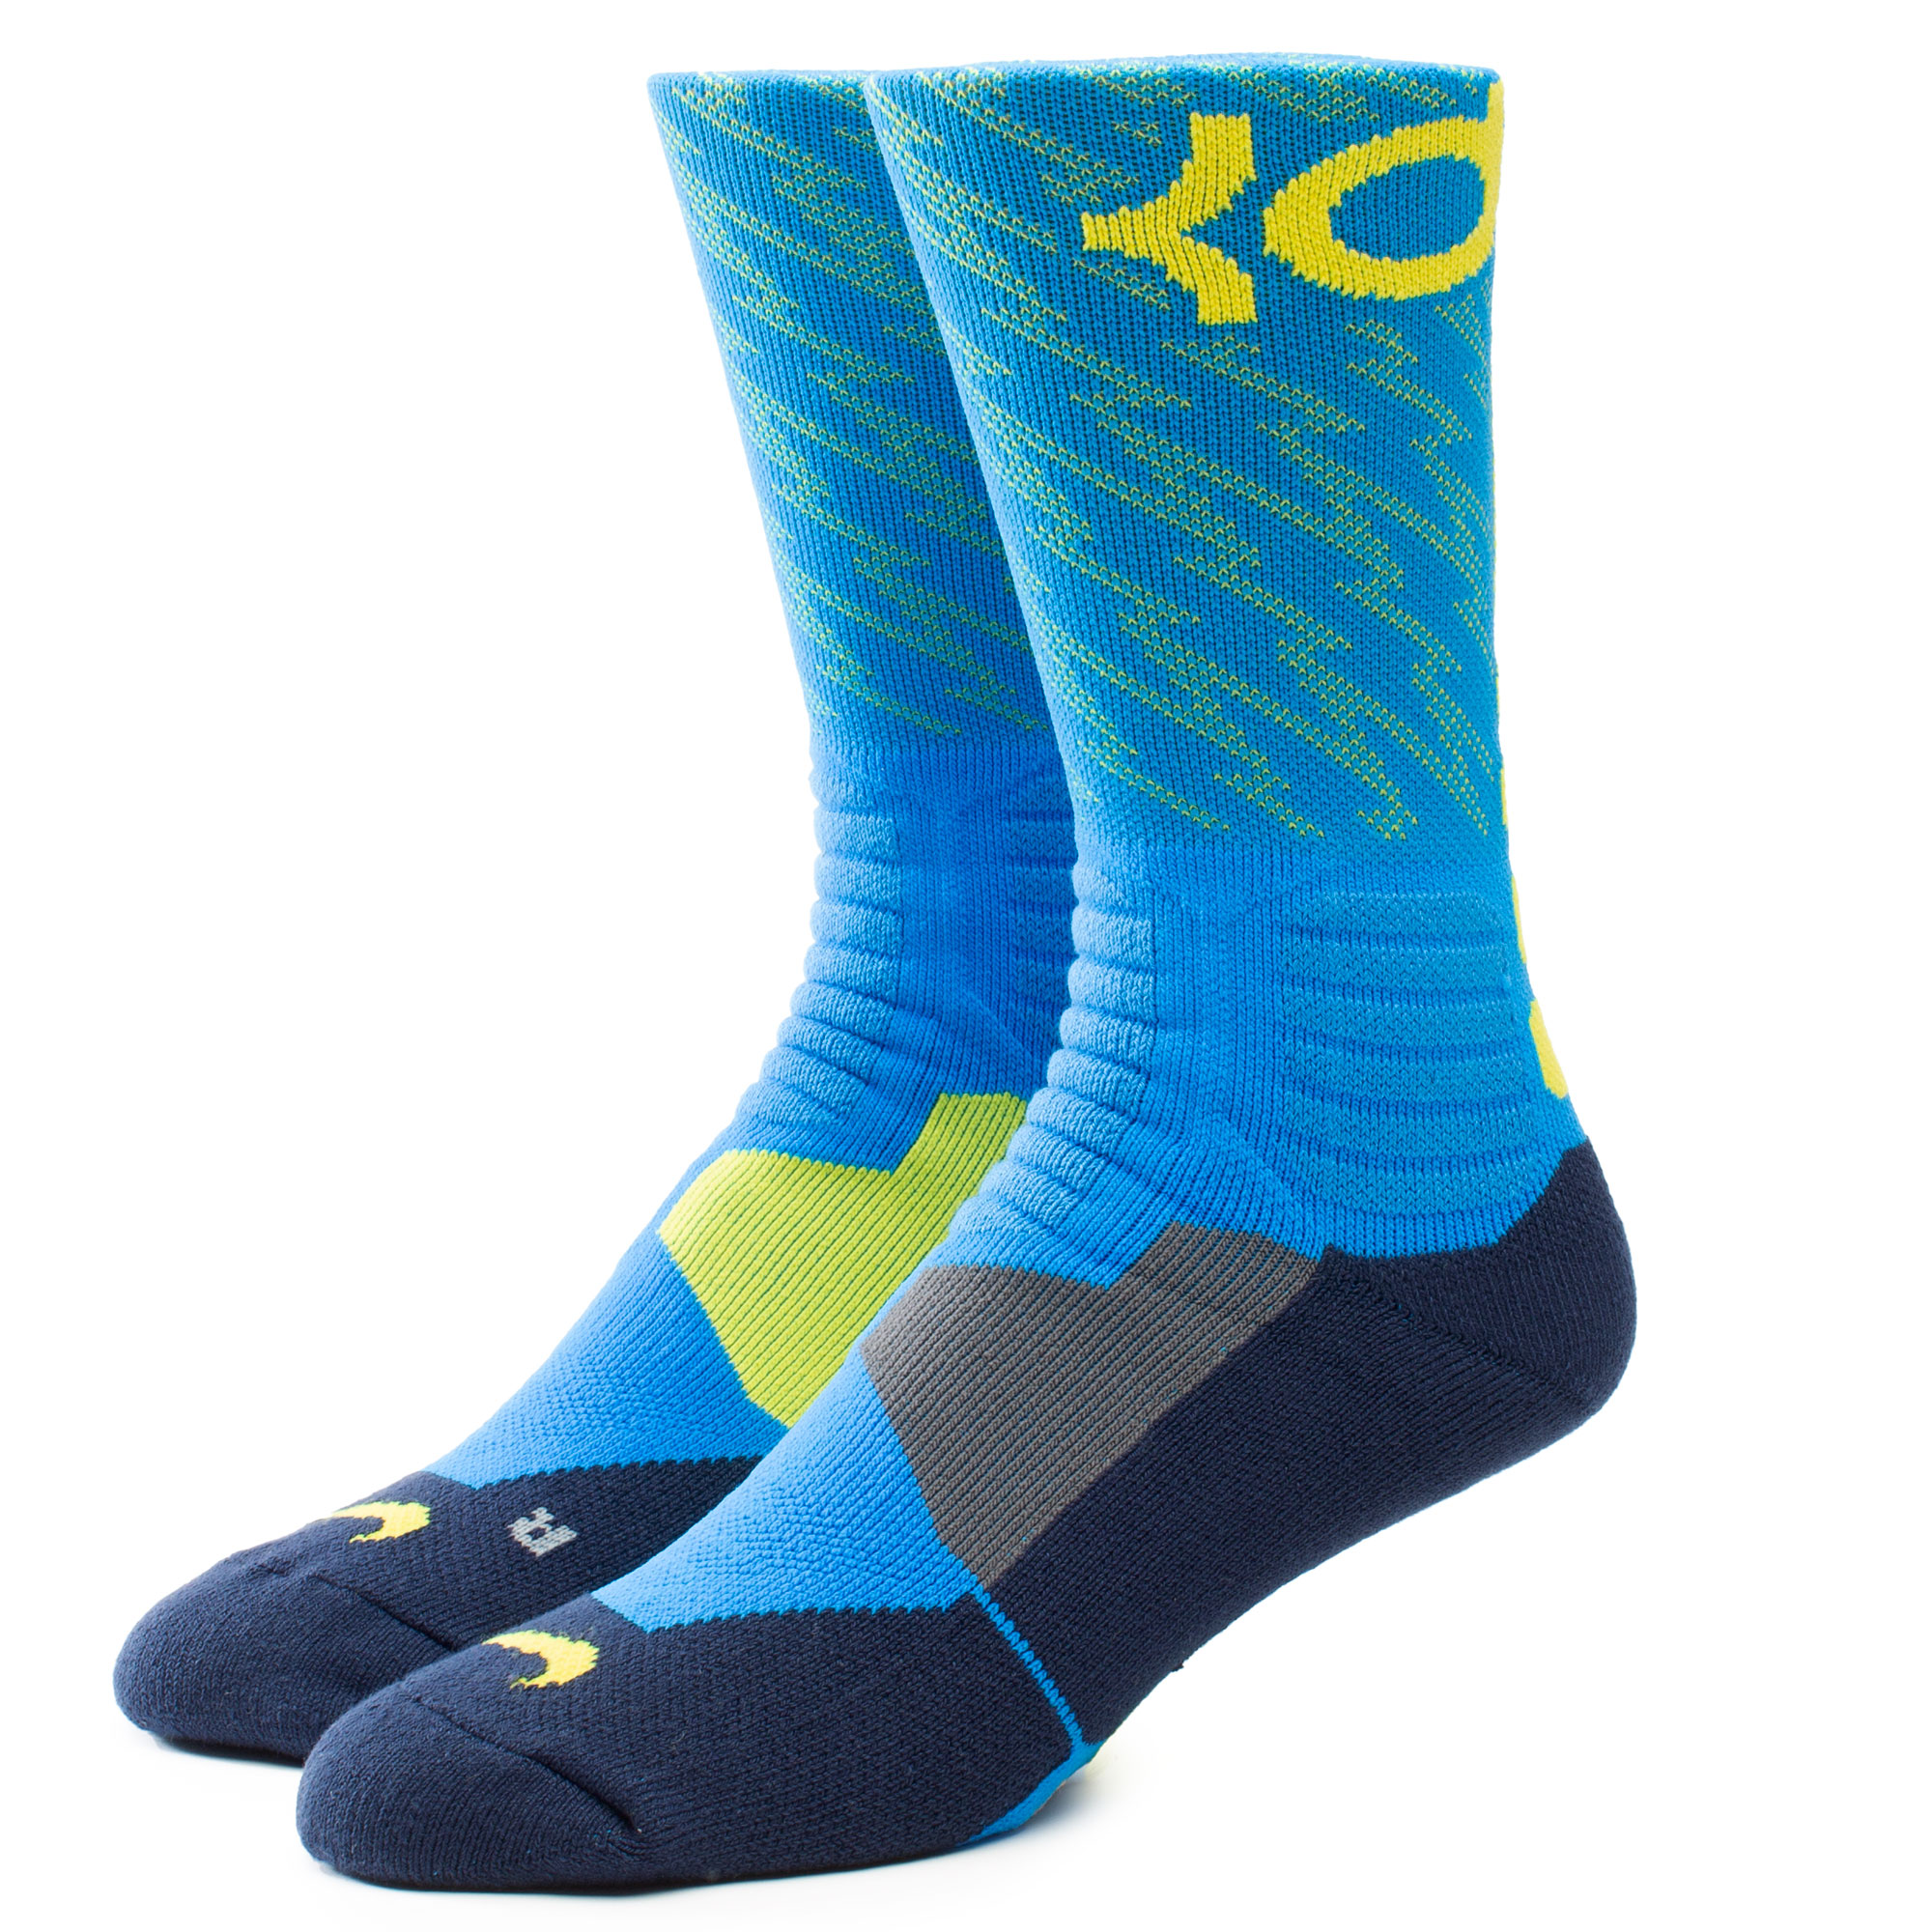 Nike Elite KD Versatility Crew Basketball Socks, Blue Black Orange MED  5375-406 